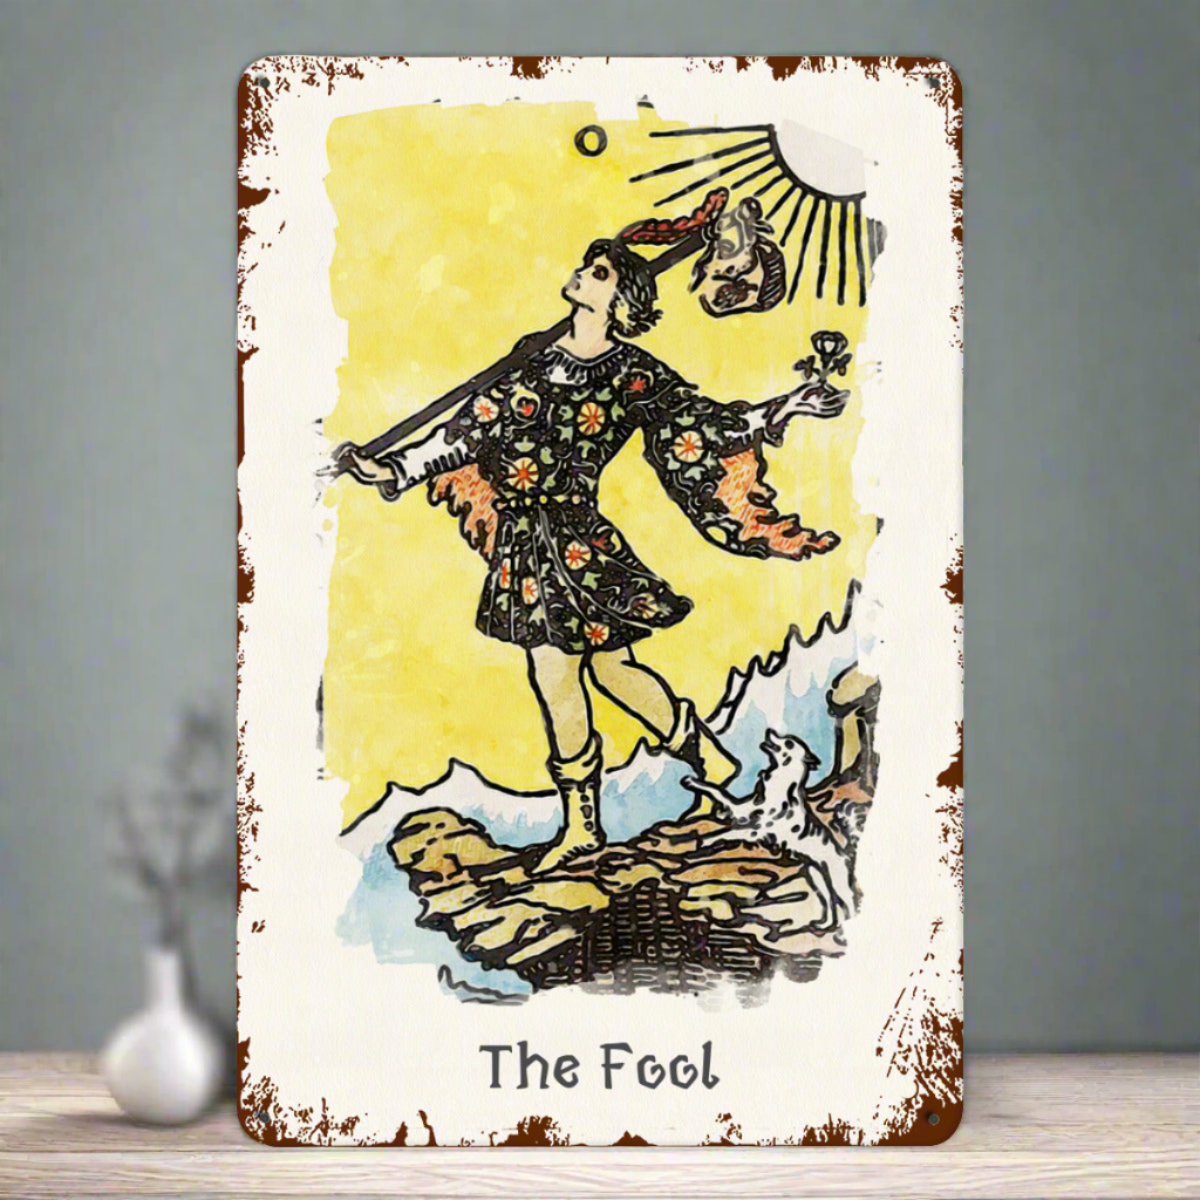 Tin Sign Of The Fool Tarot Card Painting • Major Arcana Waite-Style Cards Vintage Metal Print